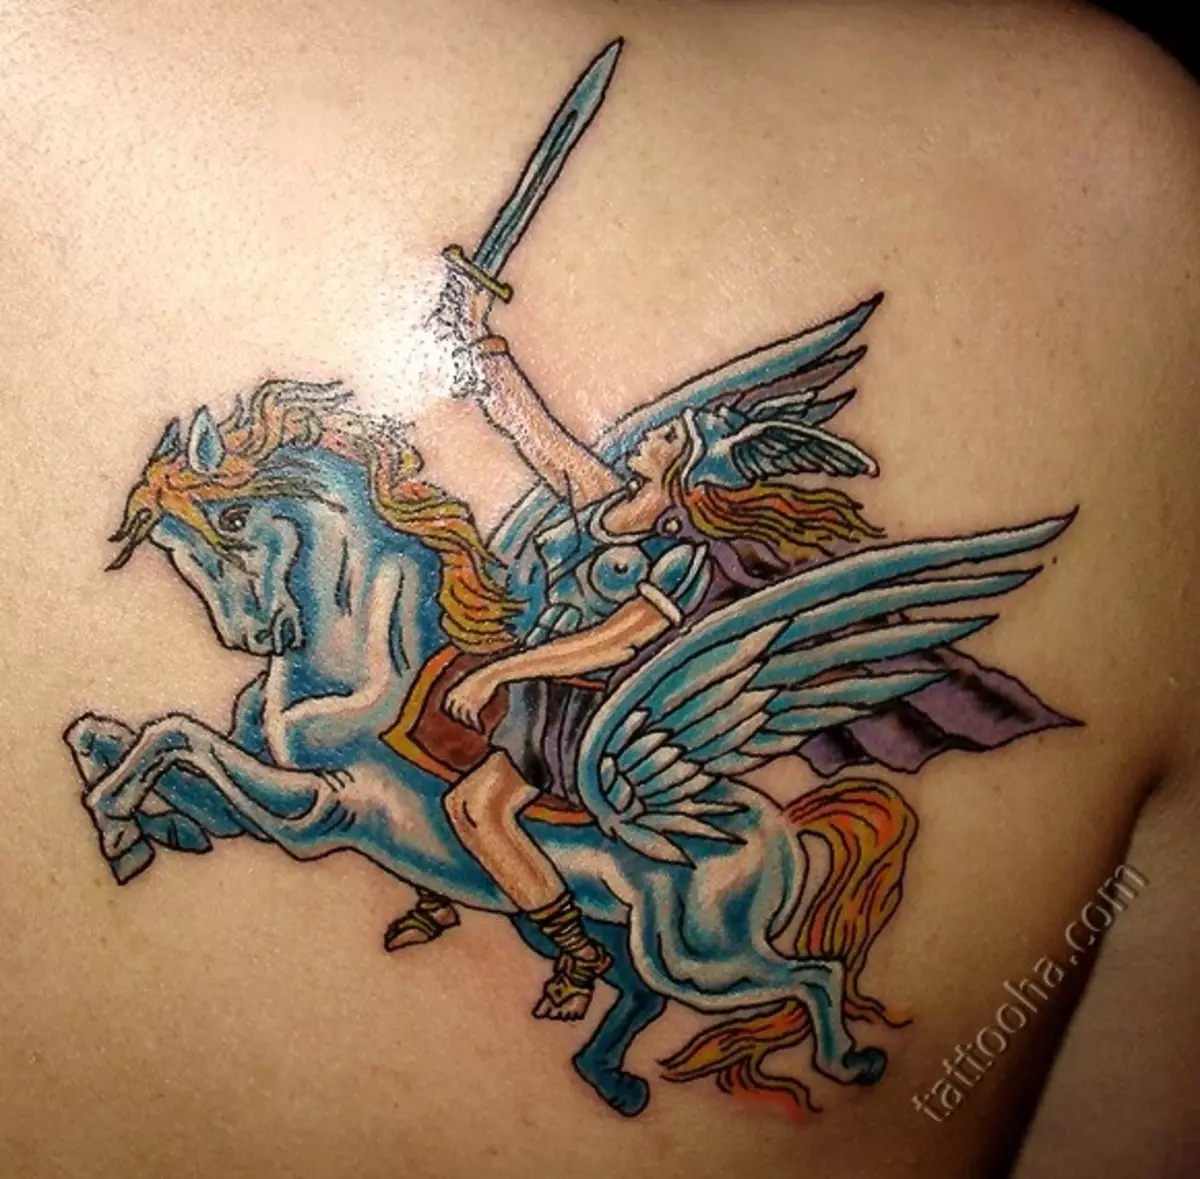 Pegasus Tattoo: ღირებულება ტატუების მამაკაცებსა და გოგონებს, ცხენის სკეტჩები სახით ცხენის ფრთები უკან და სხვა სფეროებში 14193_22